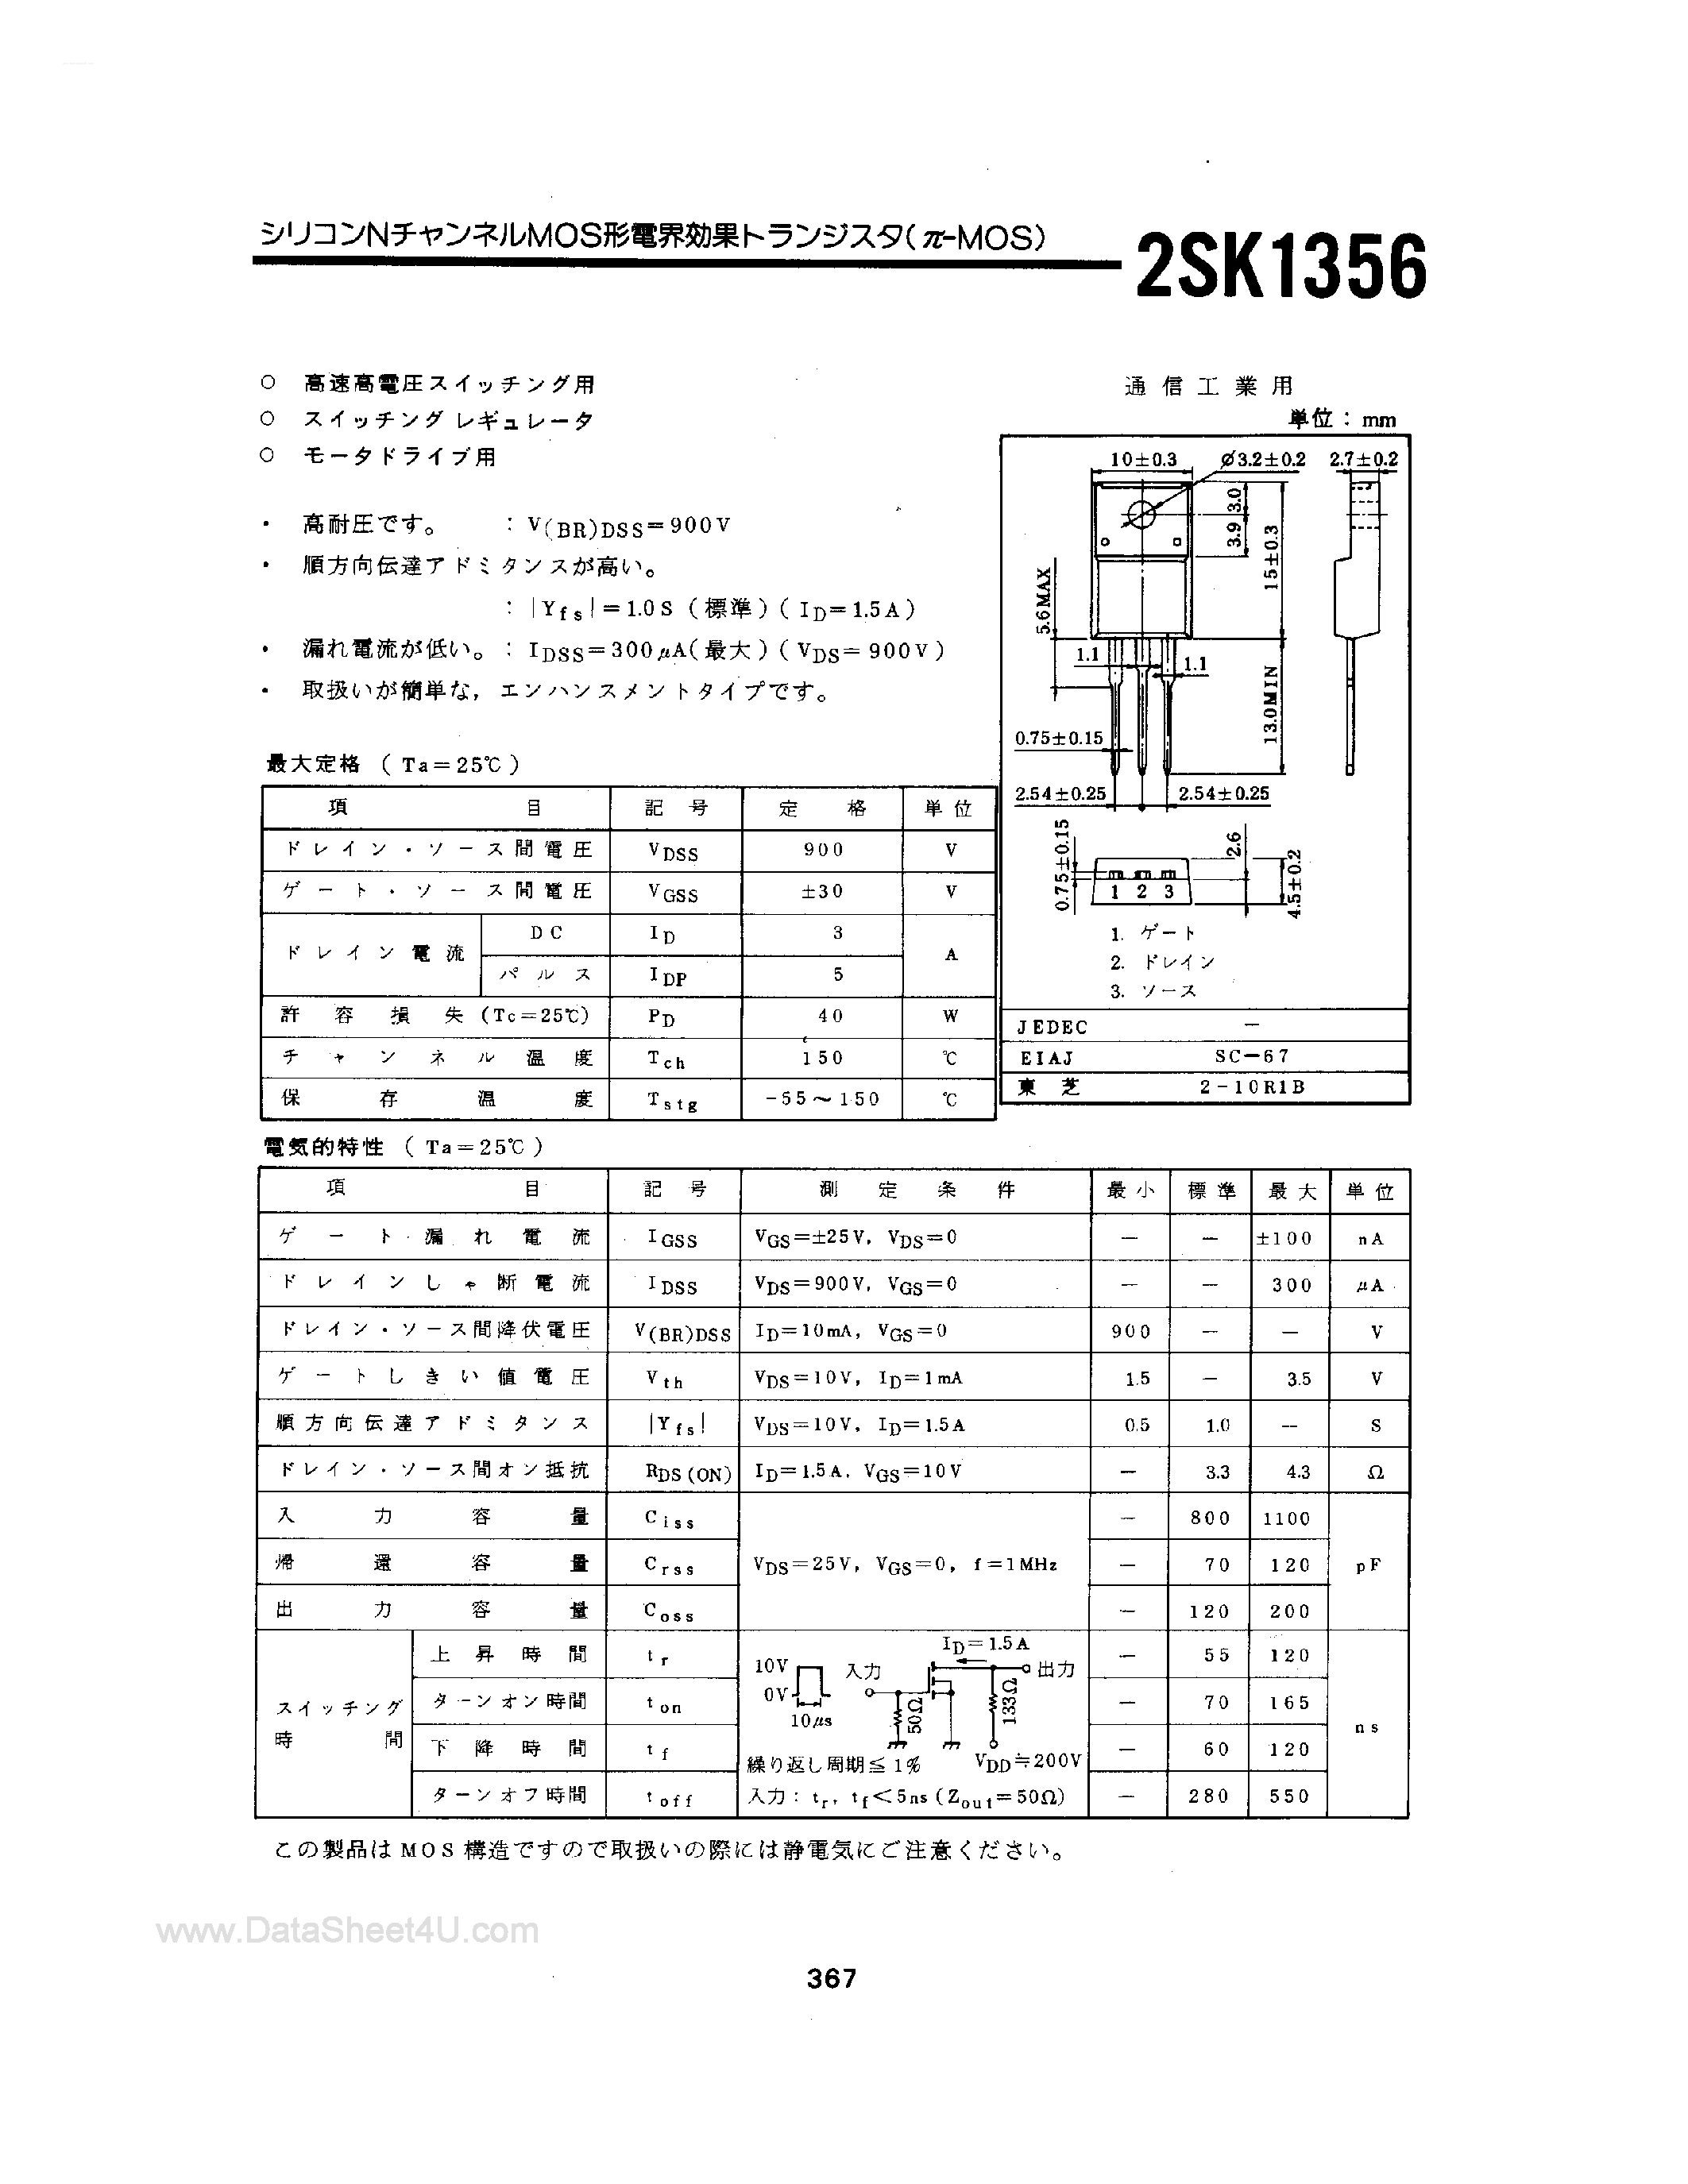 Datasheet 2SK1356 - 2SK1356 page 1